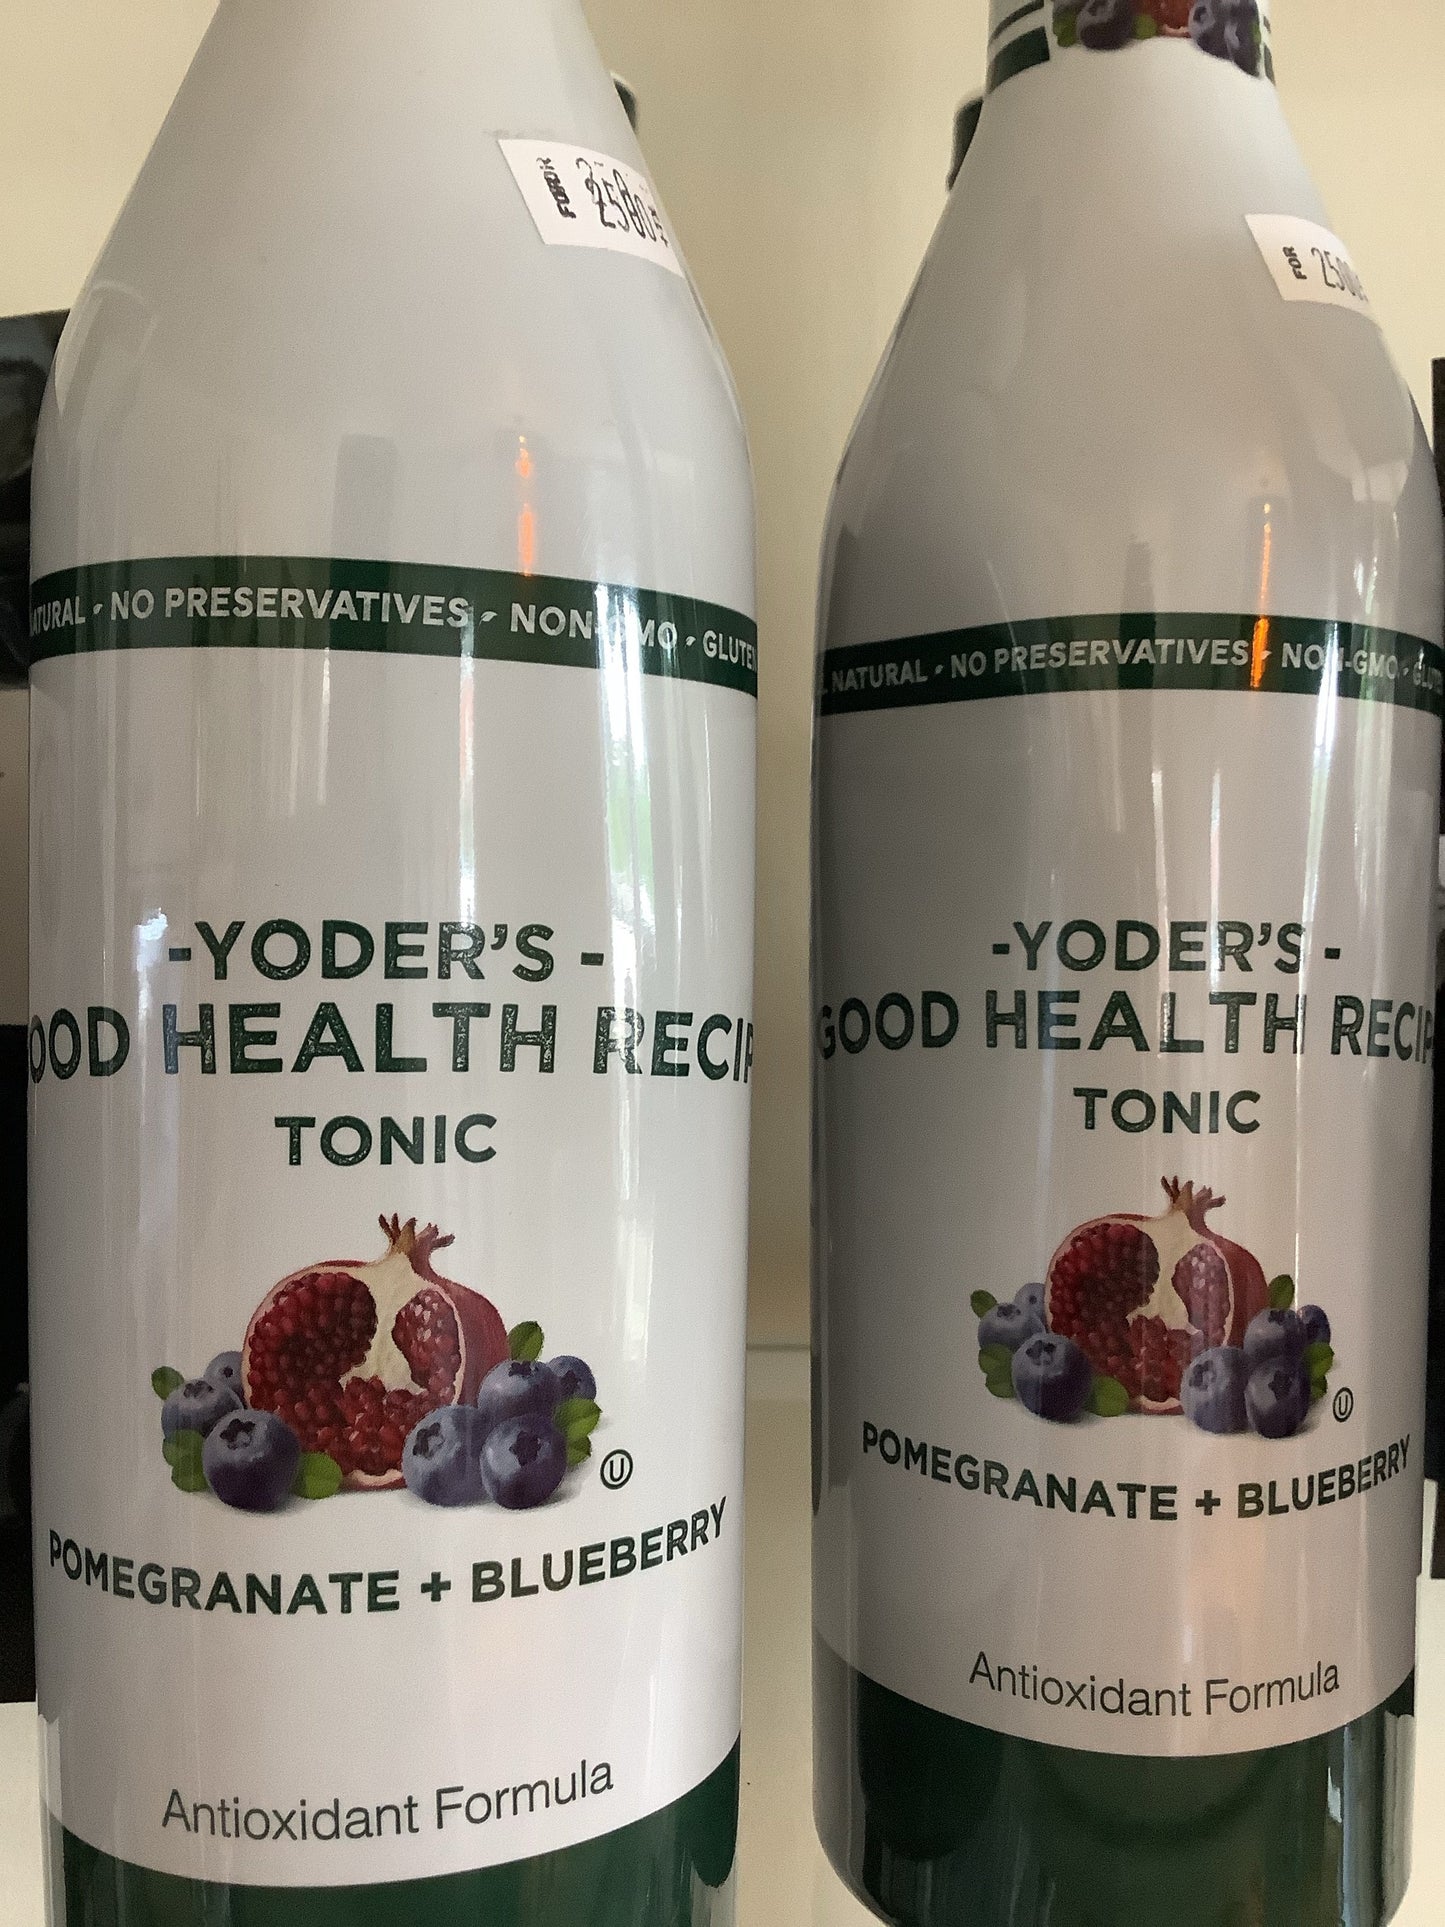 Yoder’s Good Health Recipe Tonic